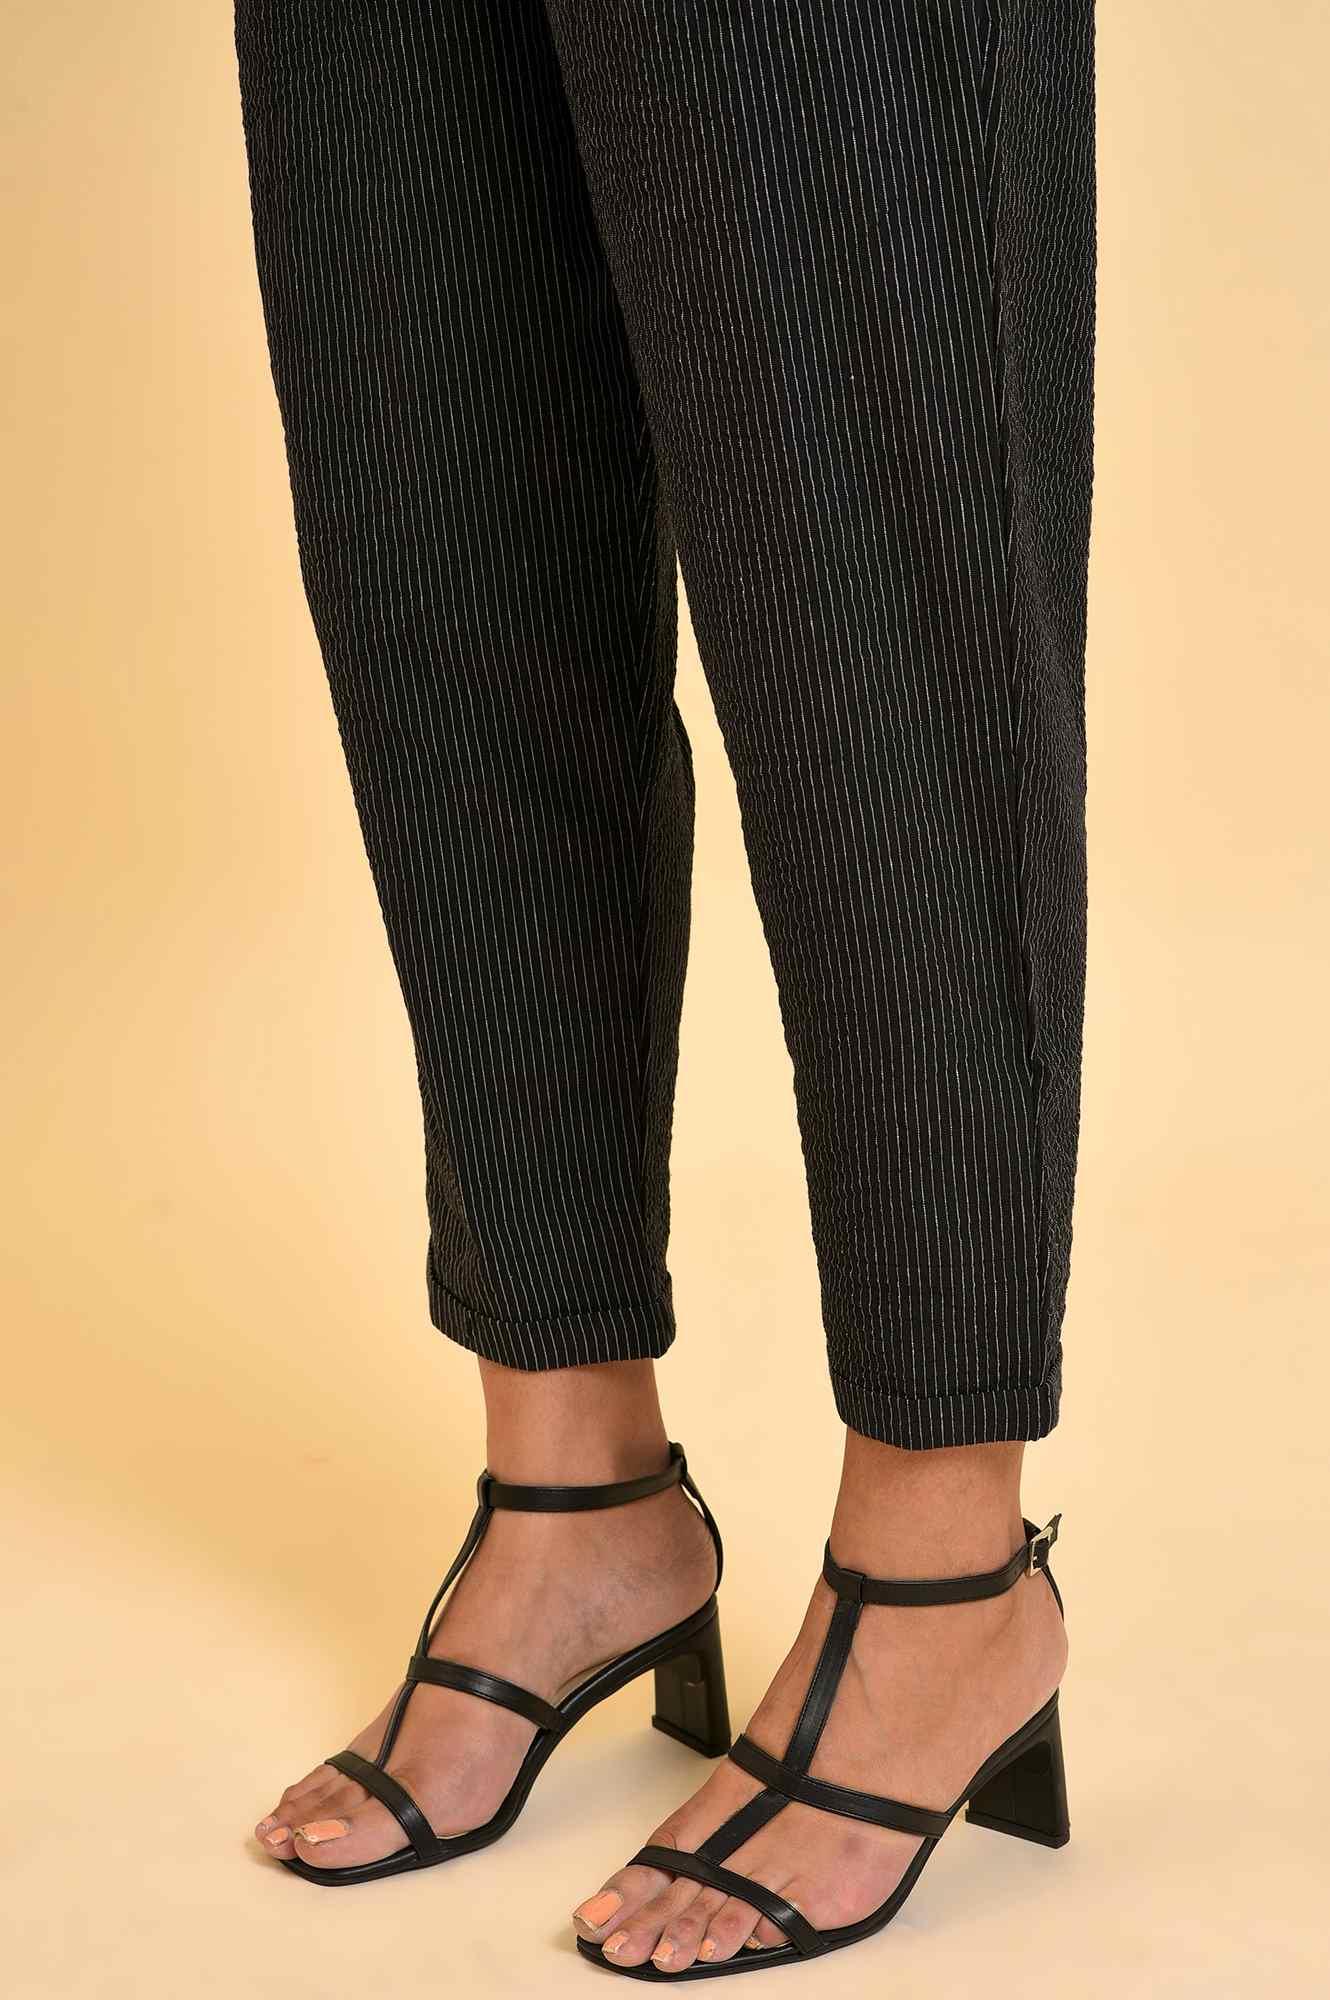 Black Yarn Dyed Fit Straight Pants - wforwoman